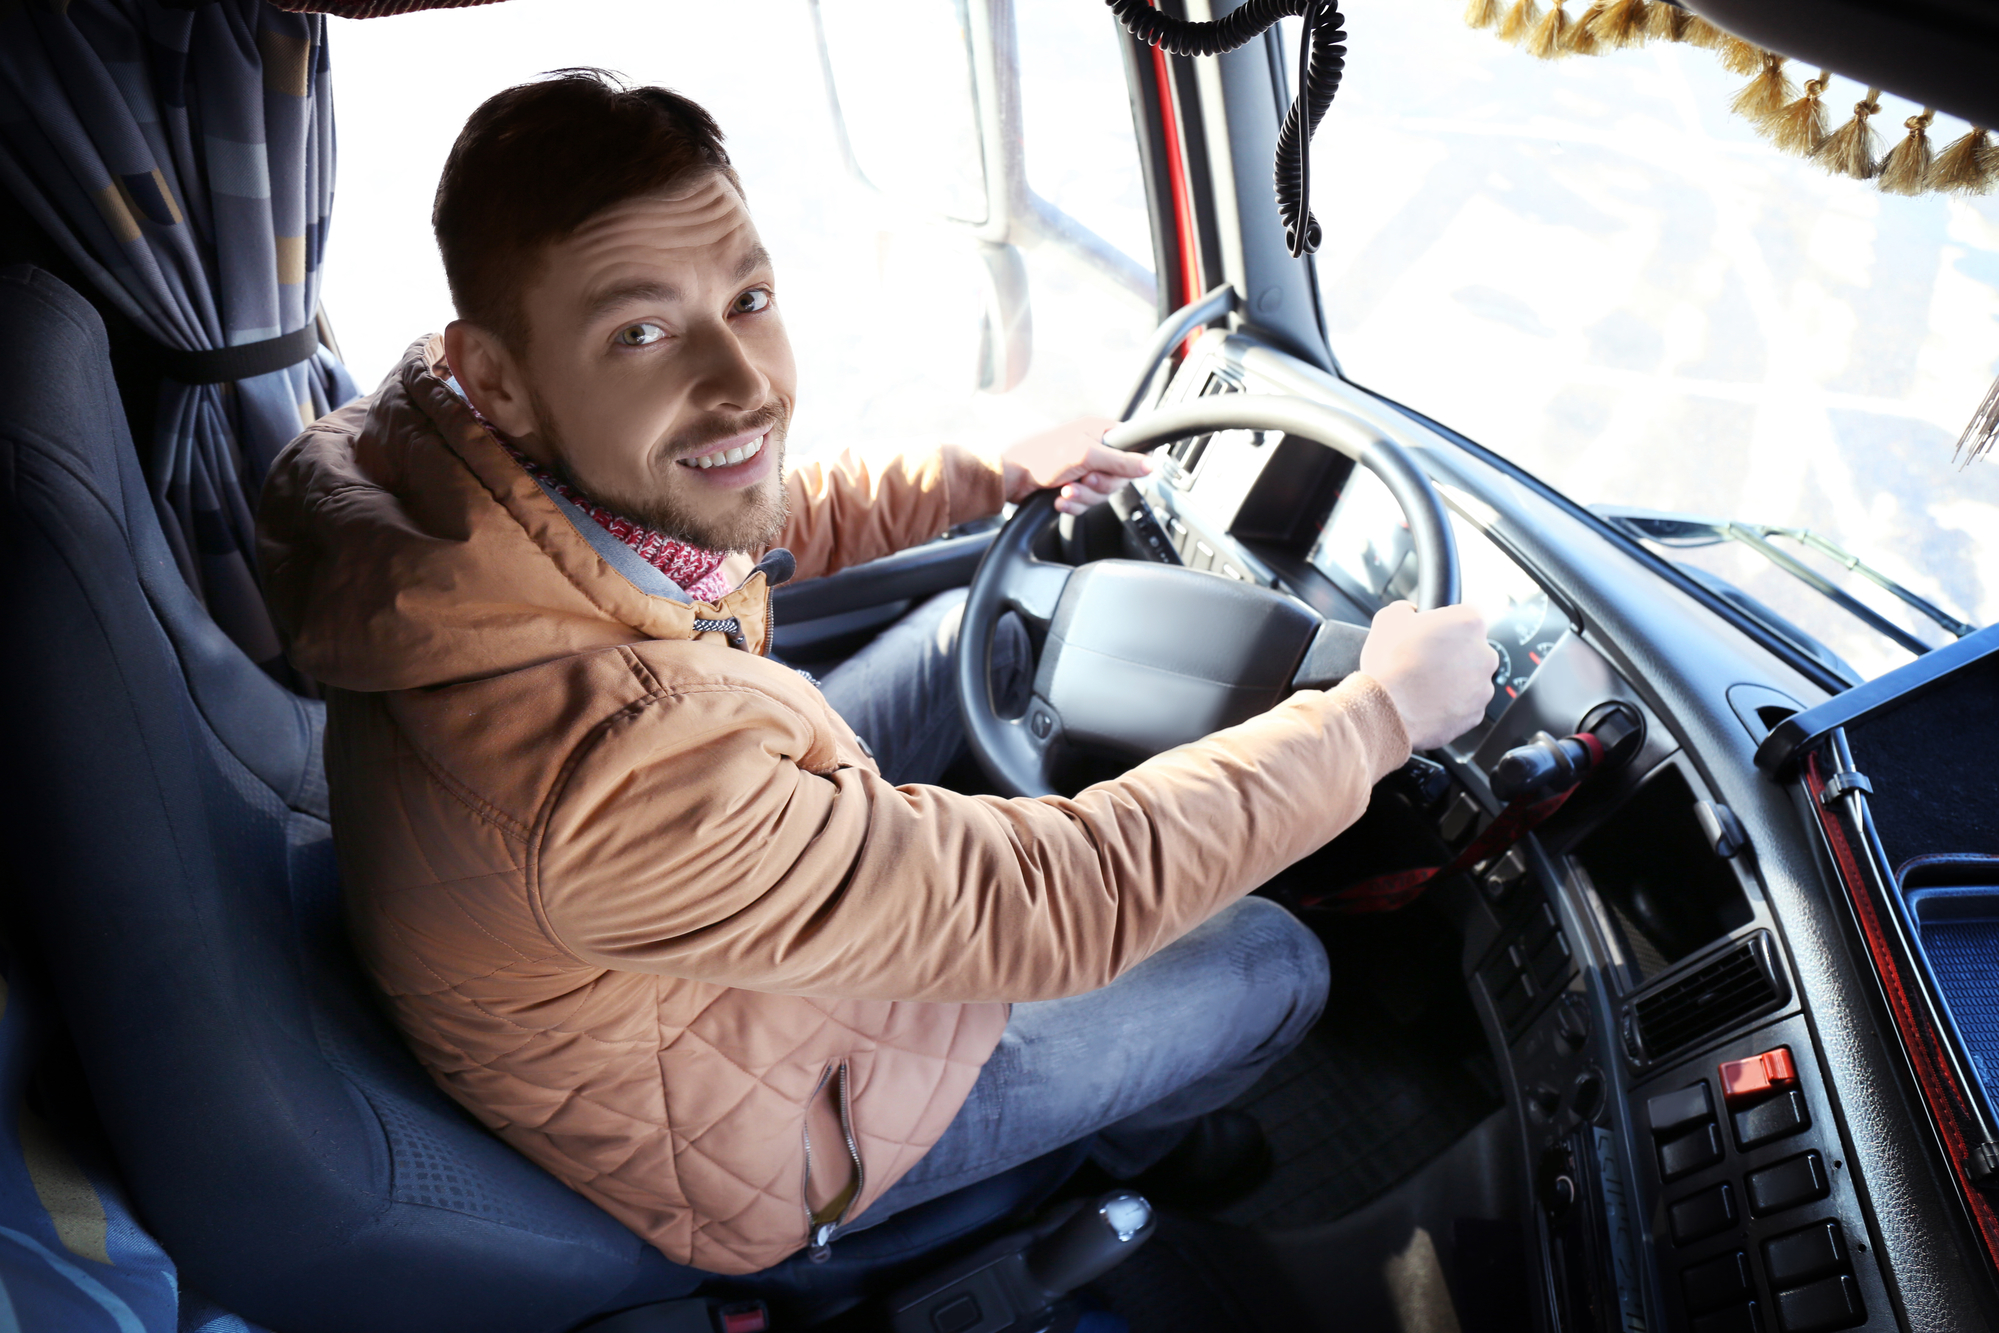 Trucking Jobs Available – Trucking is Still Hiring!